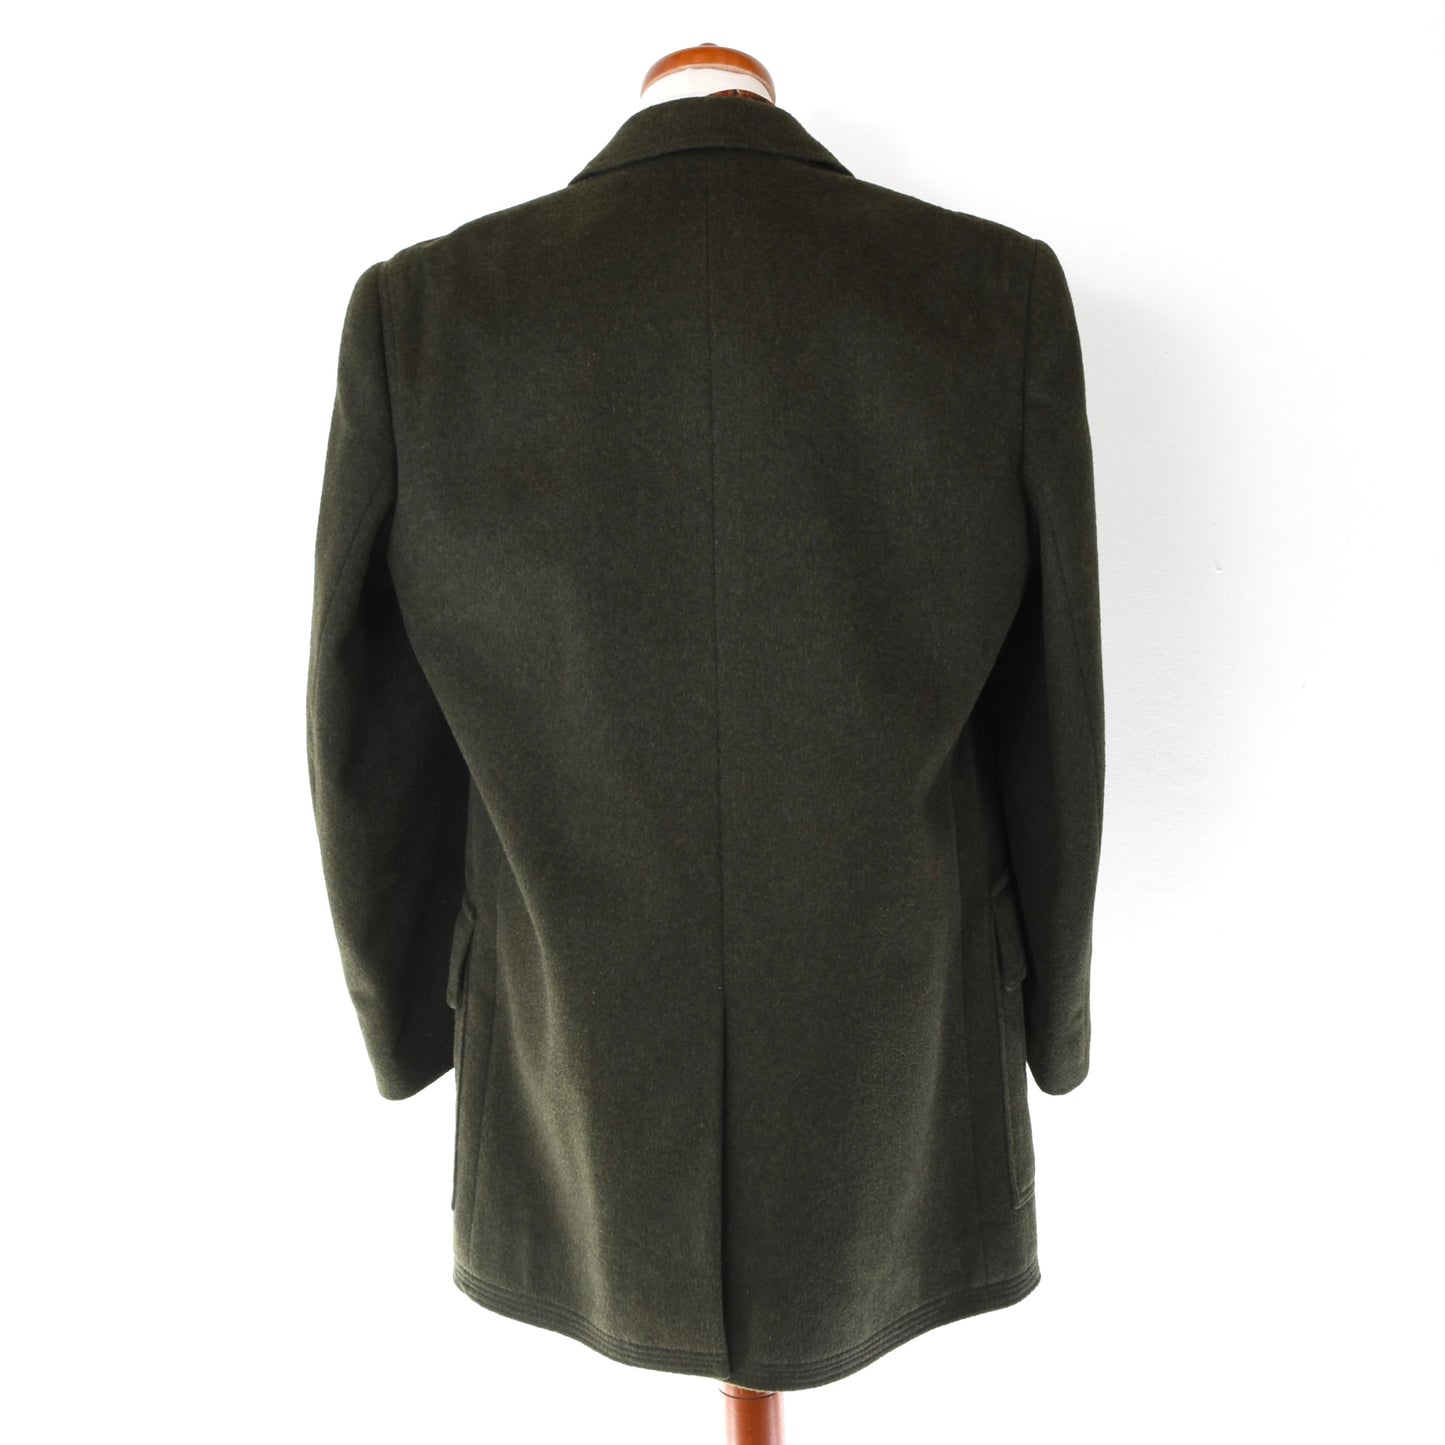 Vintage Wool Car Coat Chest ca. 57.5cm - Green